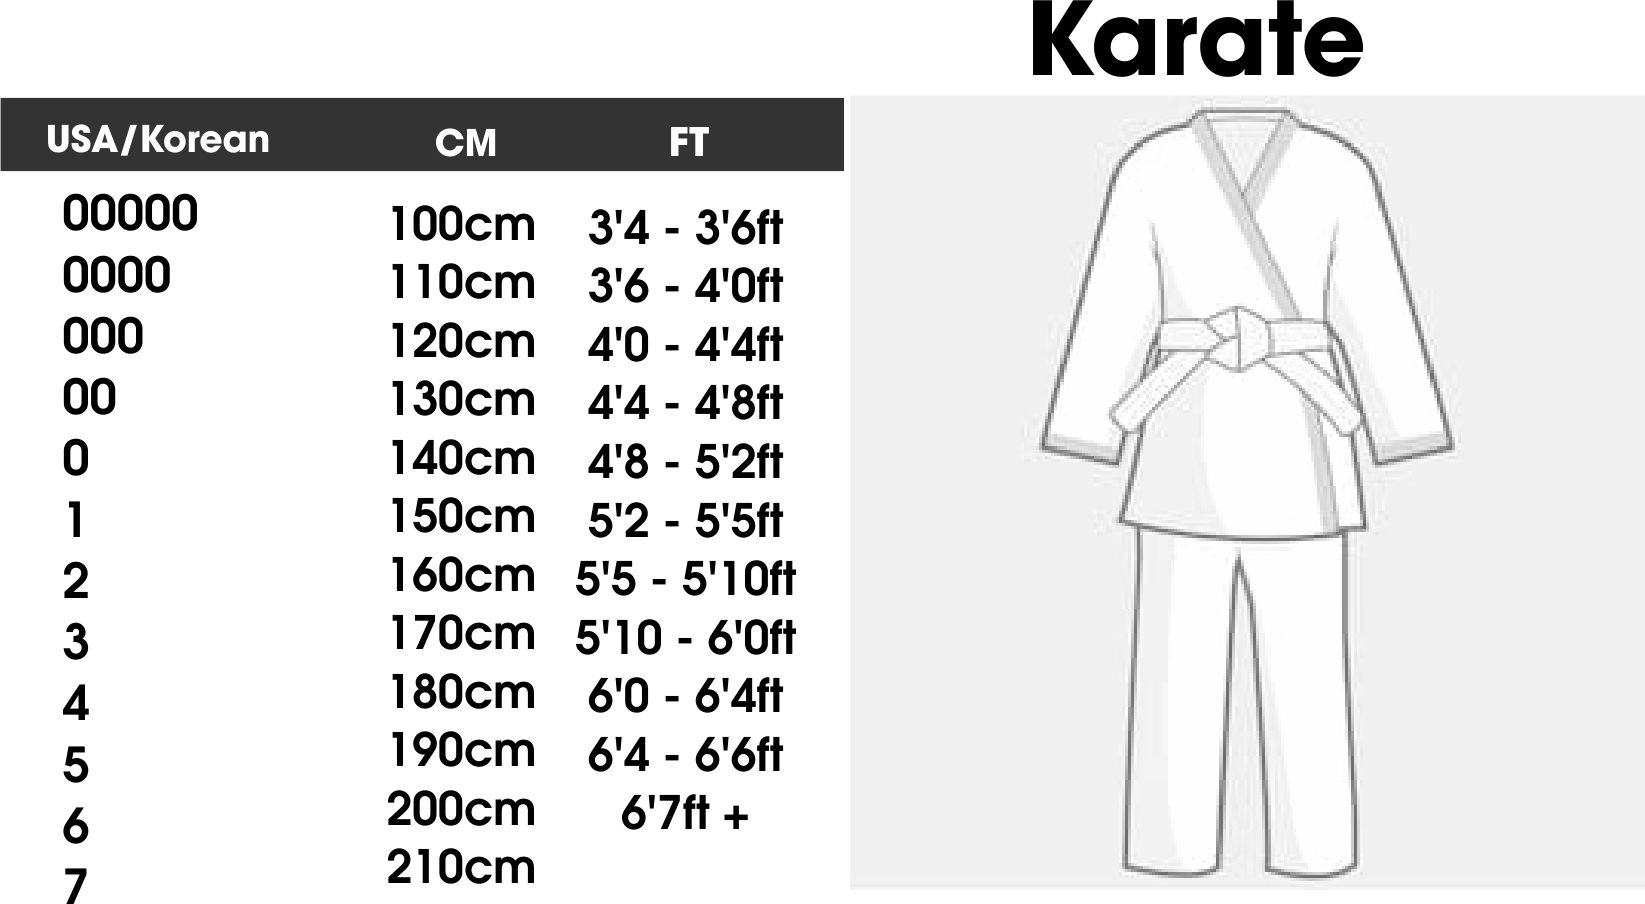 karate gi size chart uk - Part.tscoreks.org